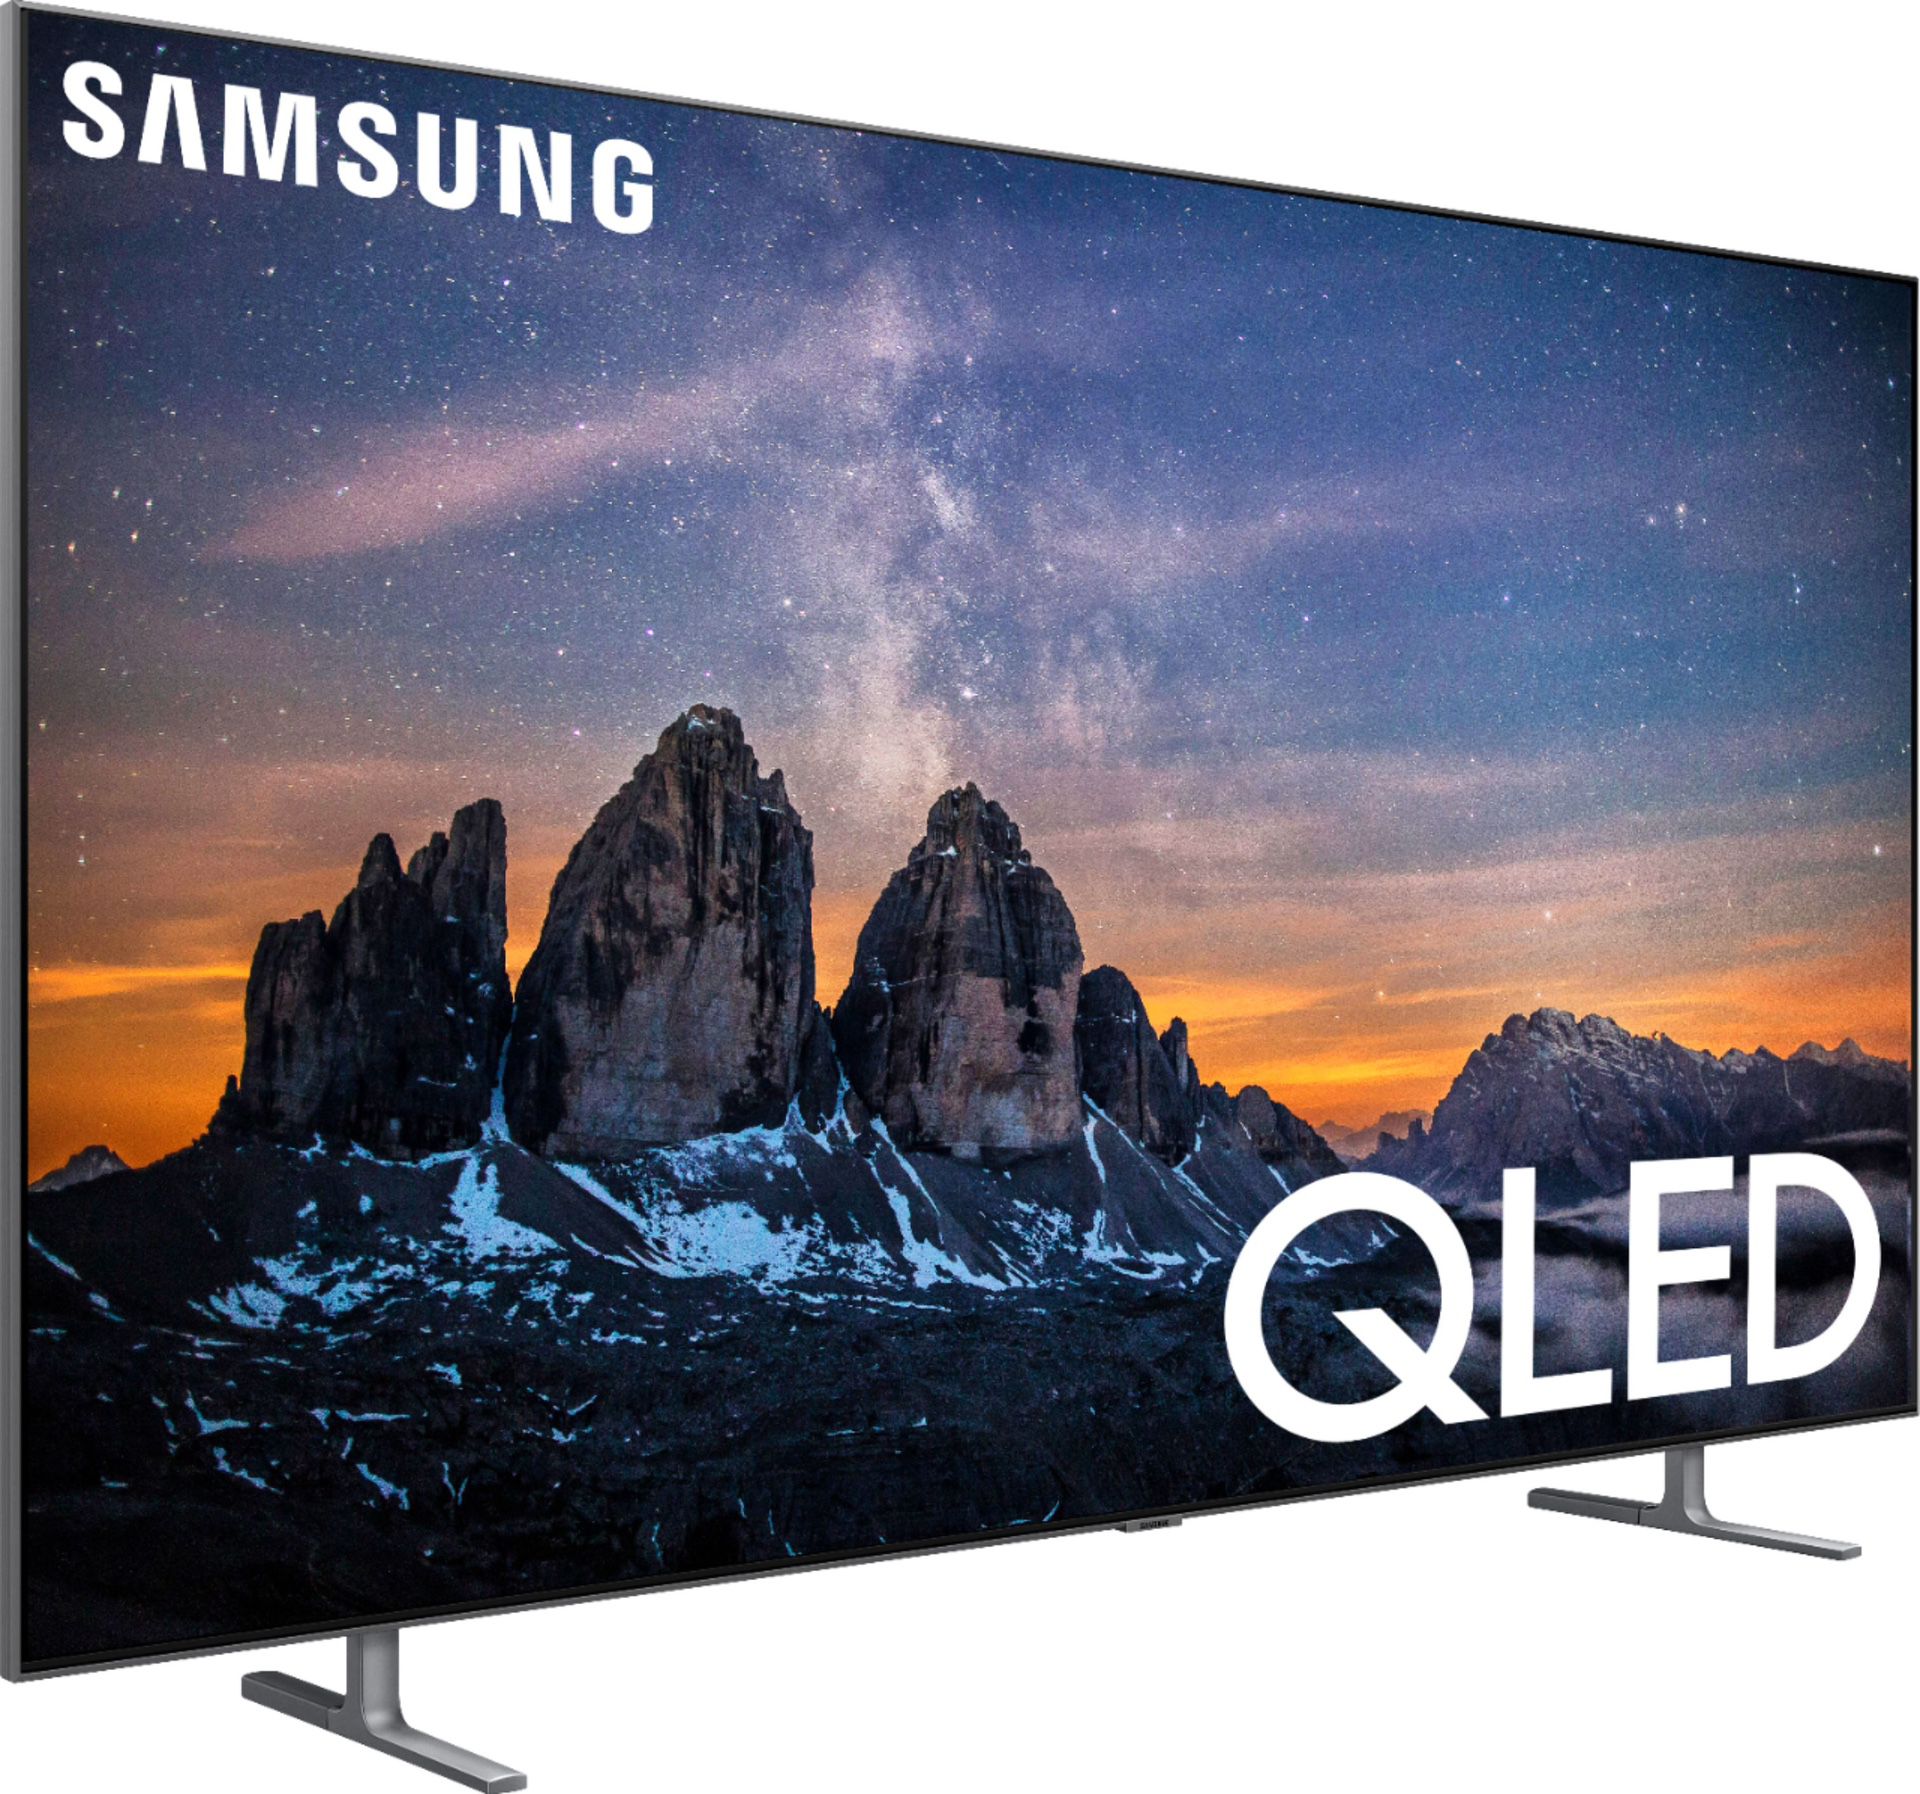 55” Samsung QLED TV